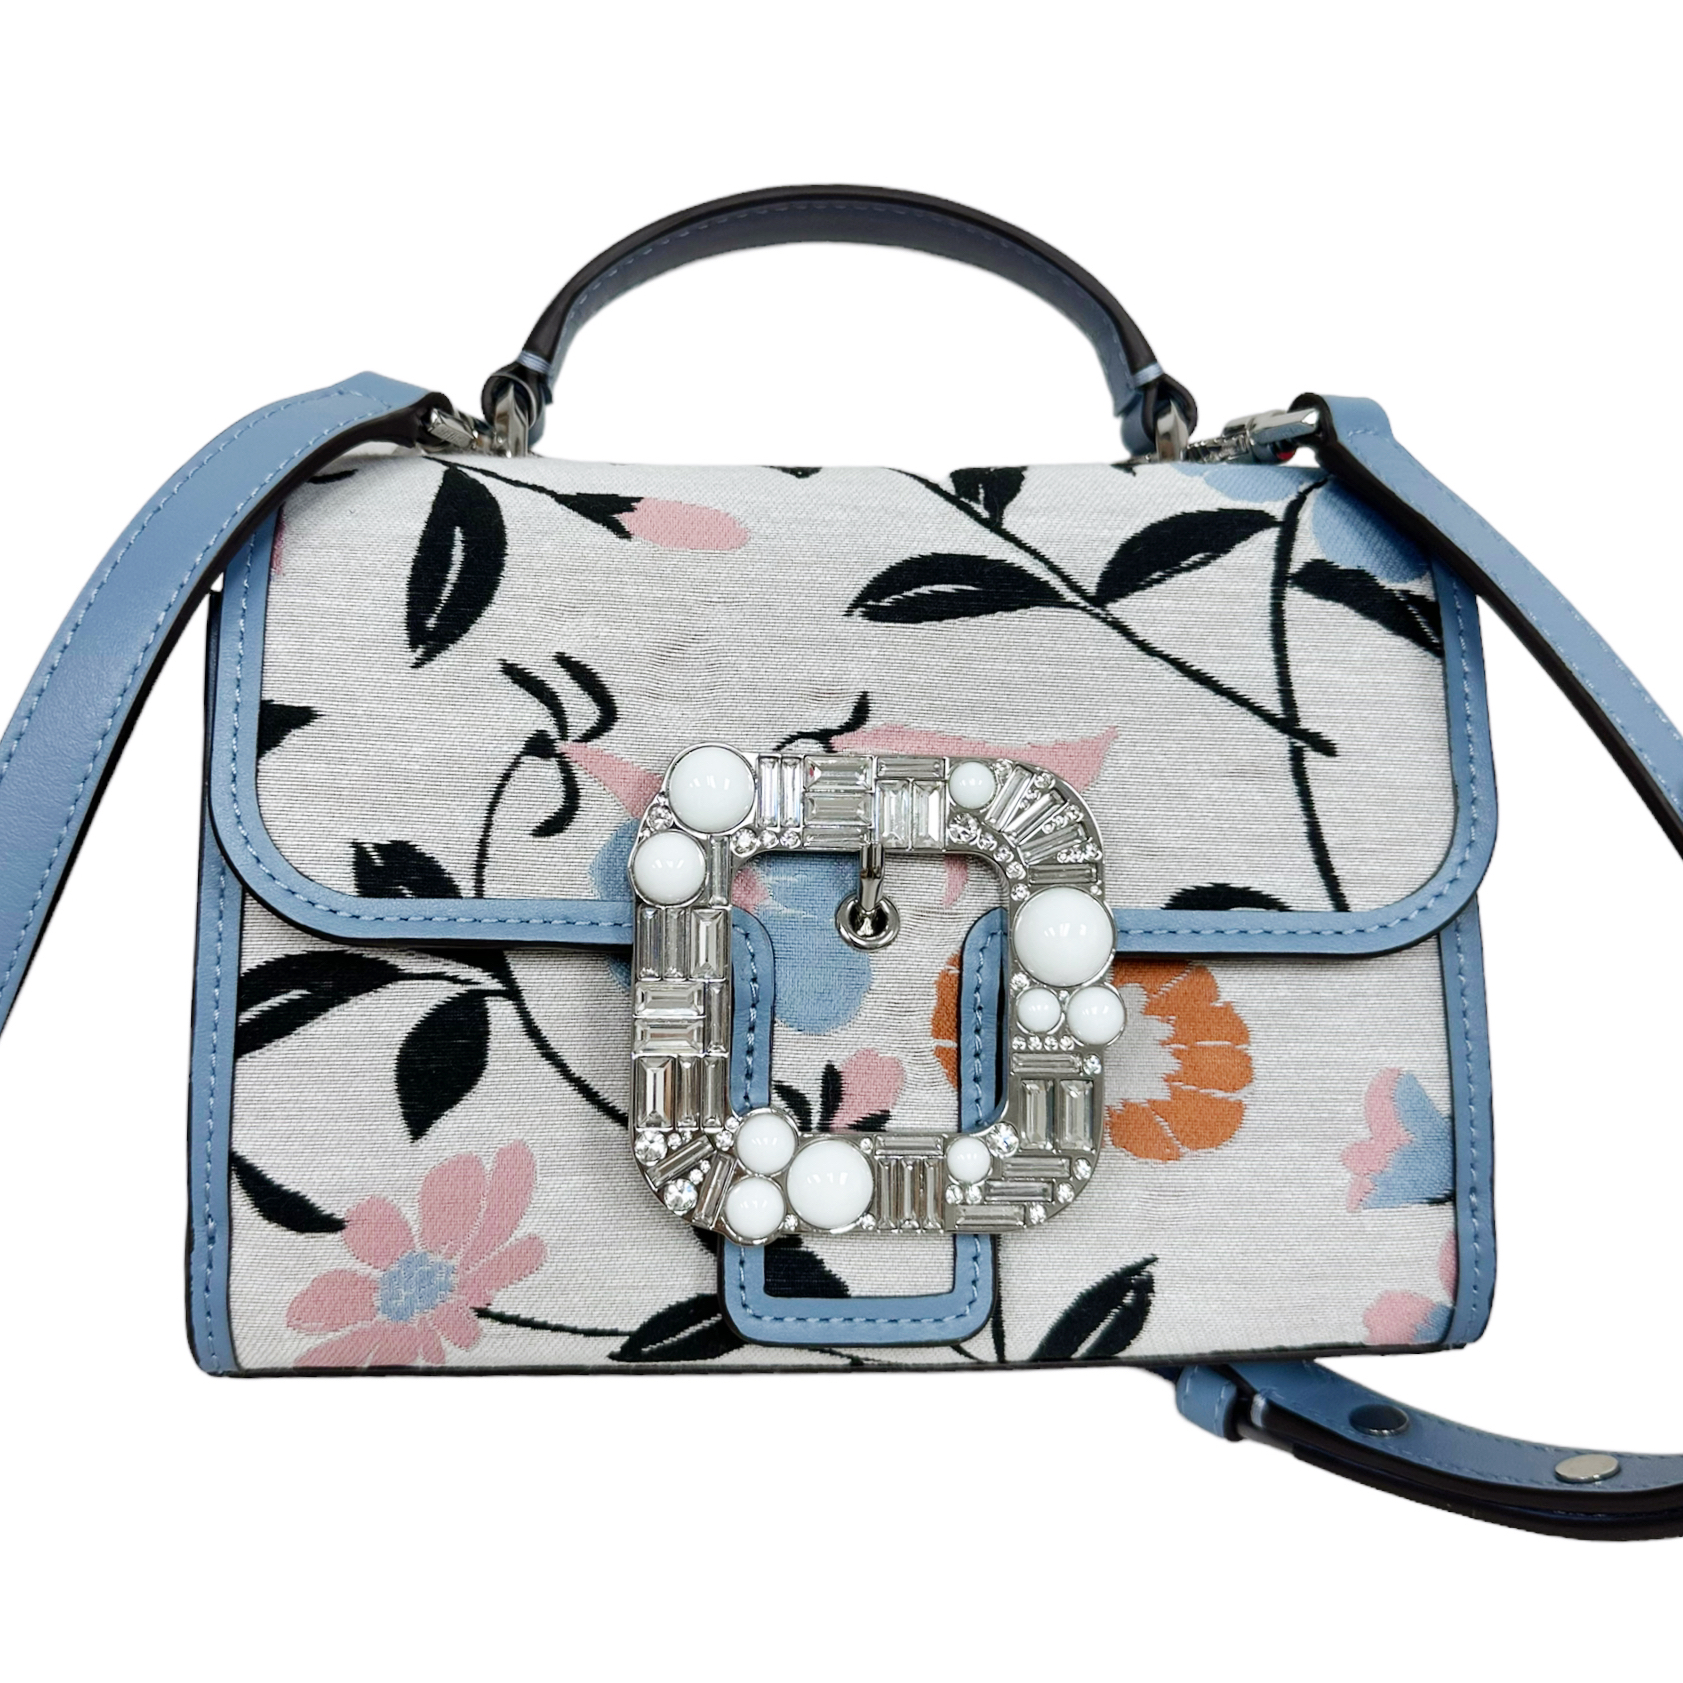 Kate Spade bag. lovitt buckled floral jacquard small top handle crossbody.  